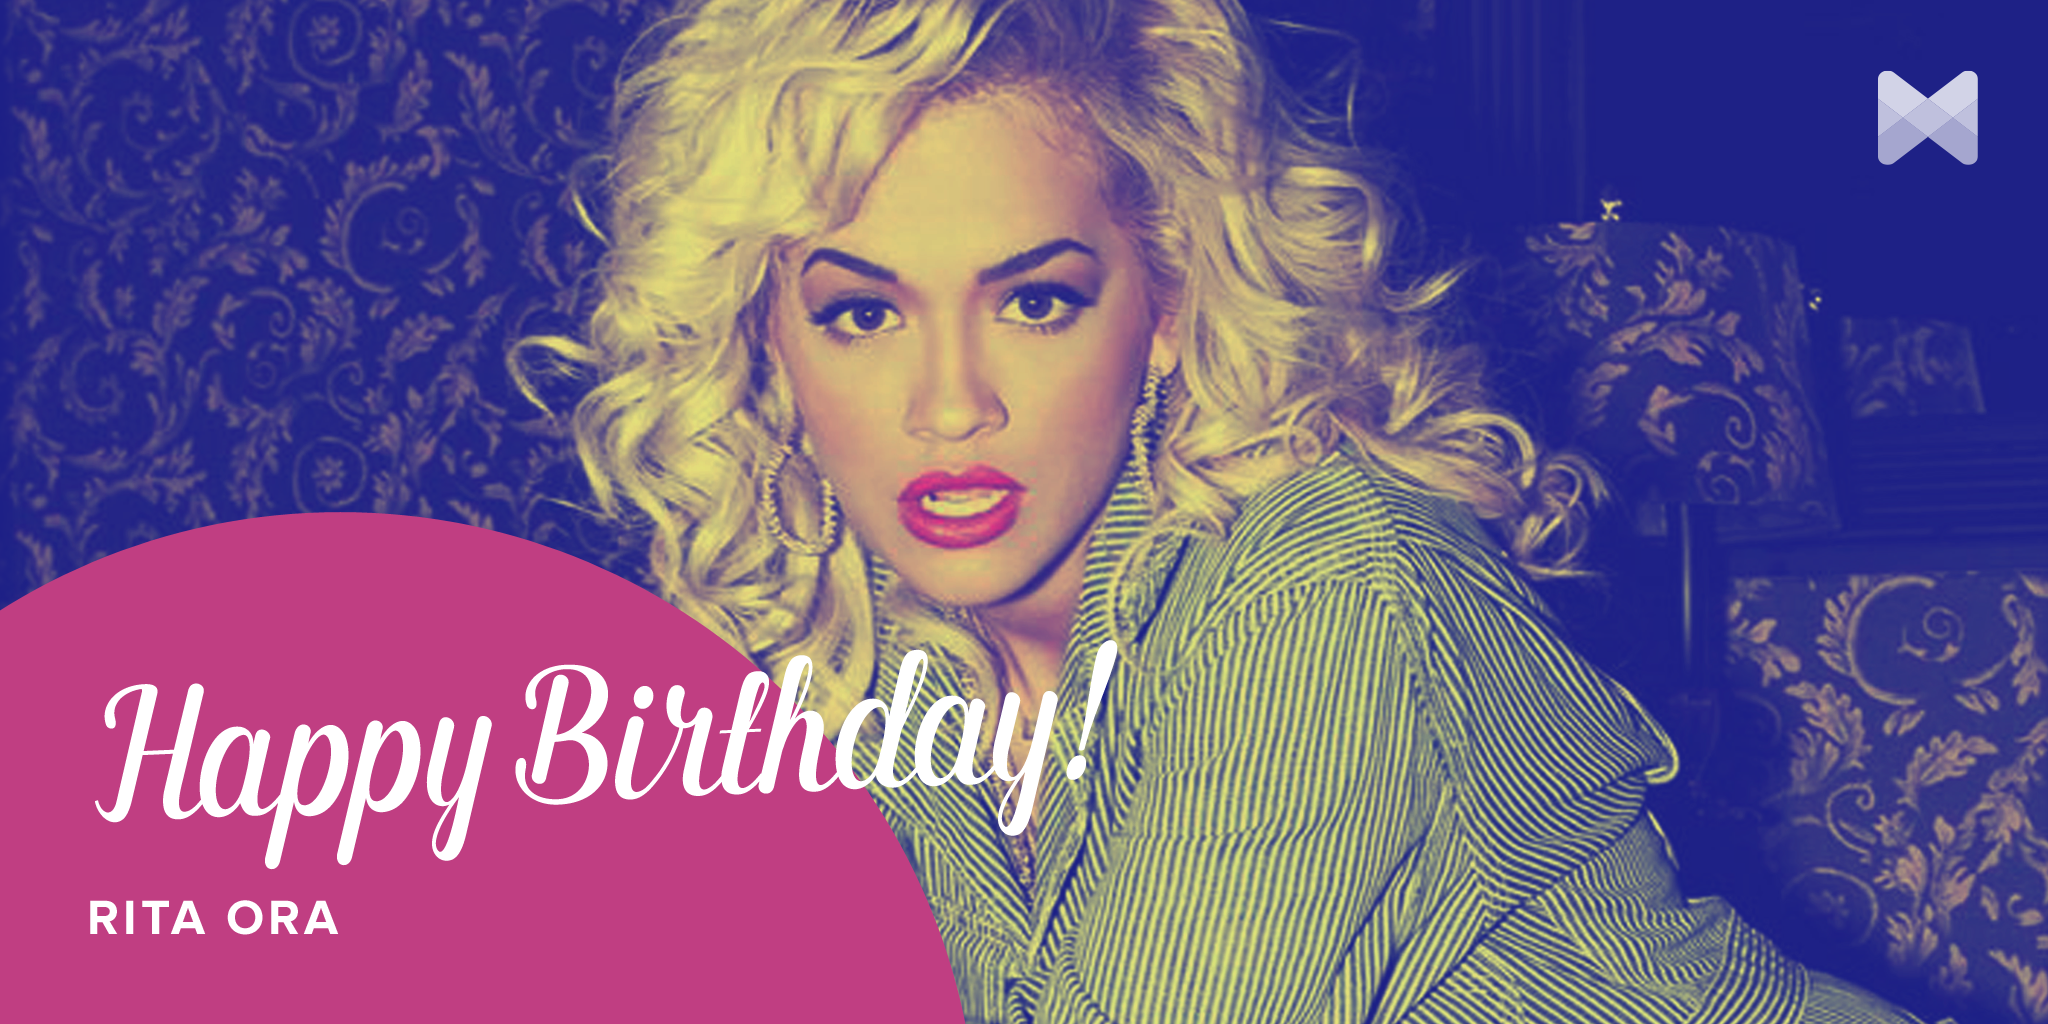 Happy 25th Birthday, Rita Ora! 